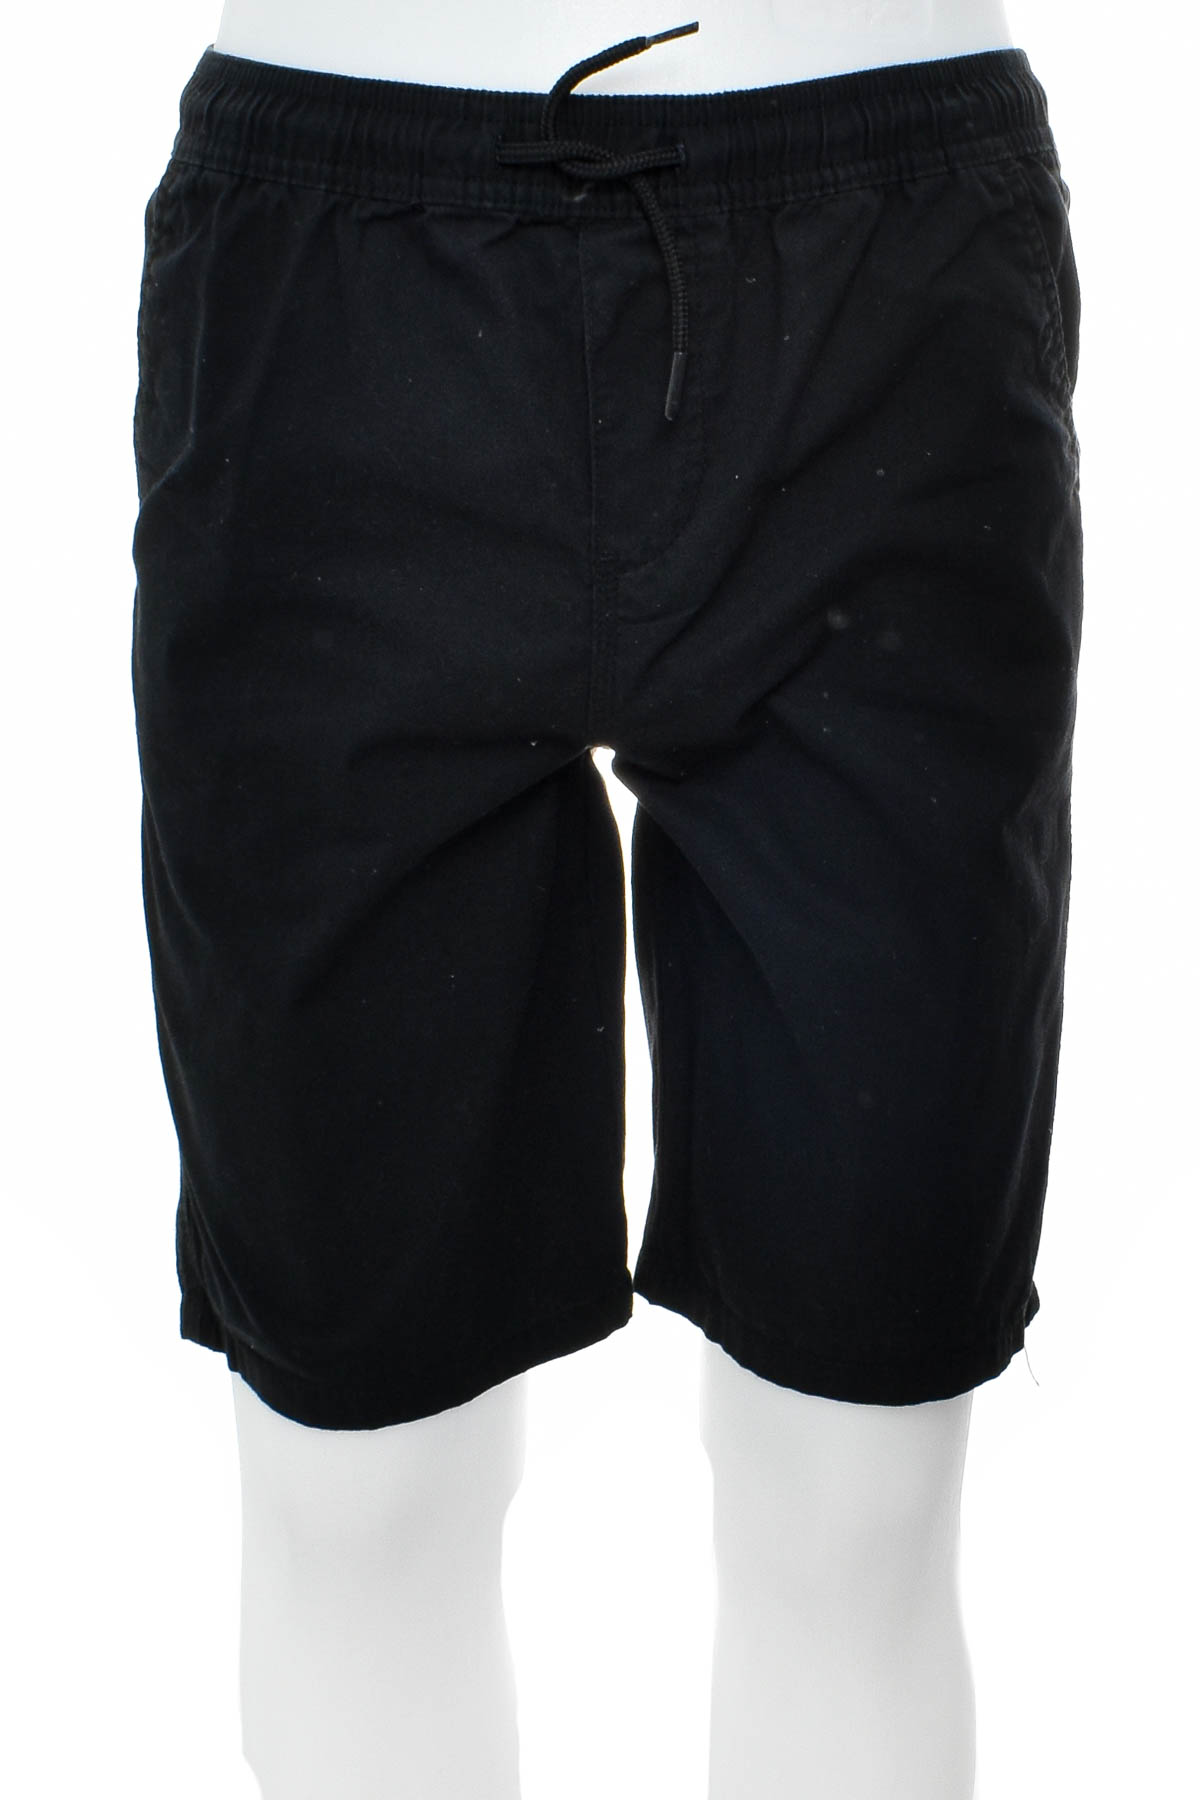 Shorts for boys - PRIMARK - 0